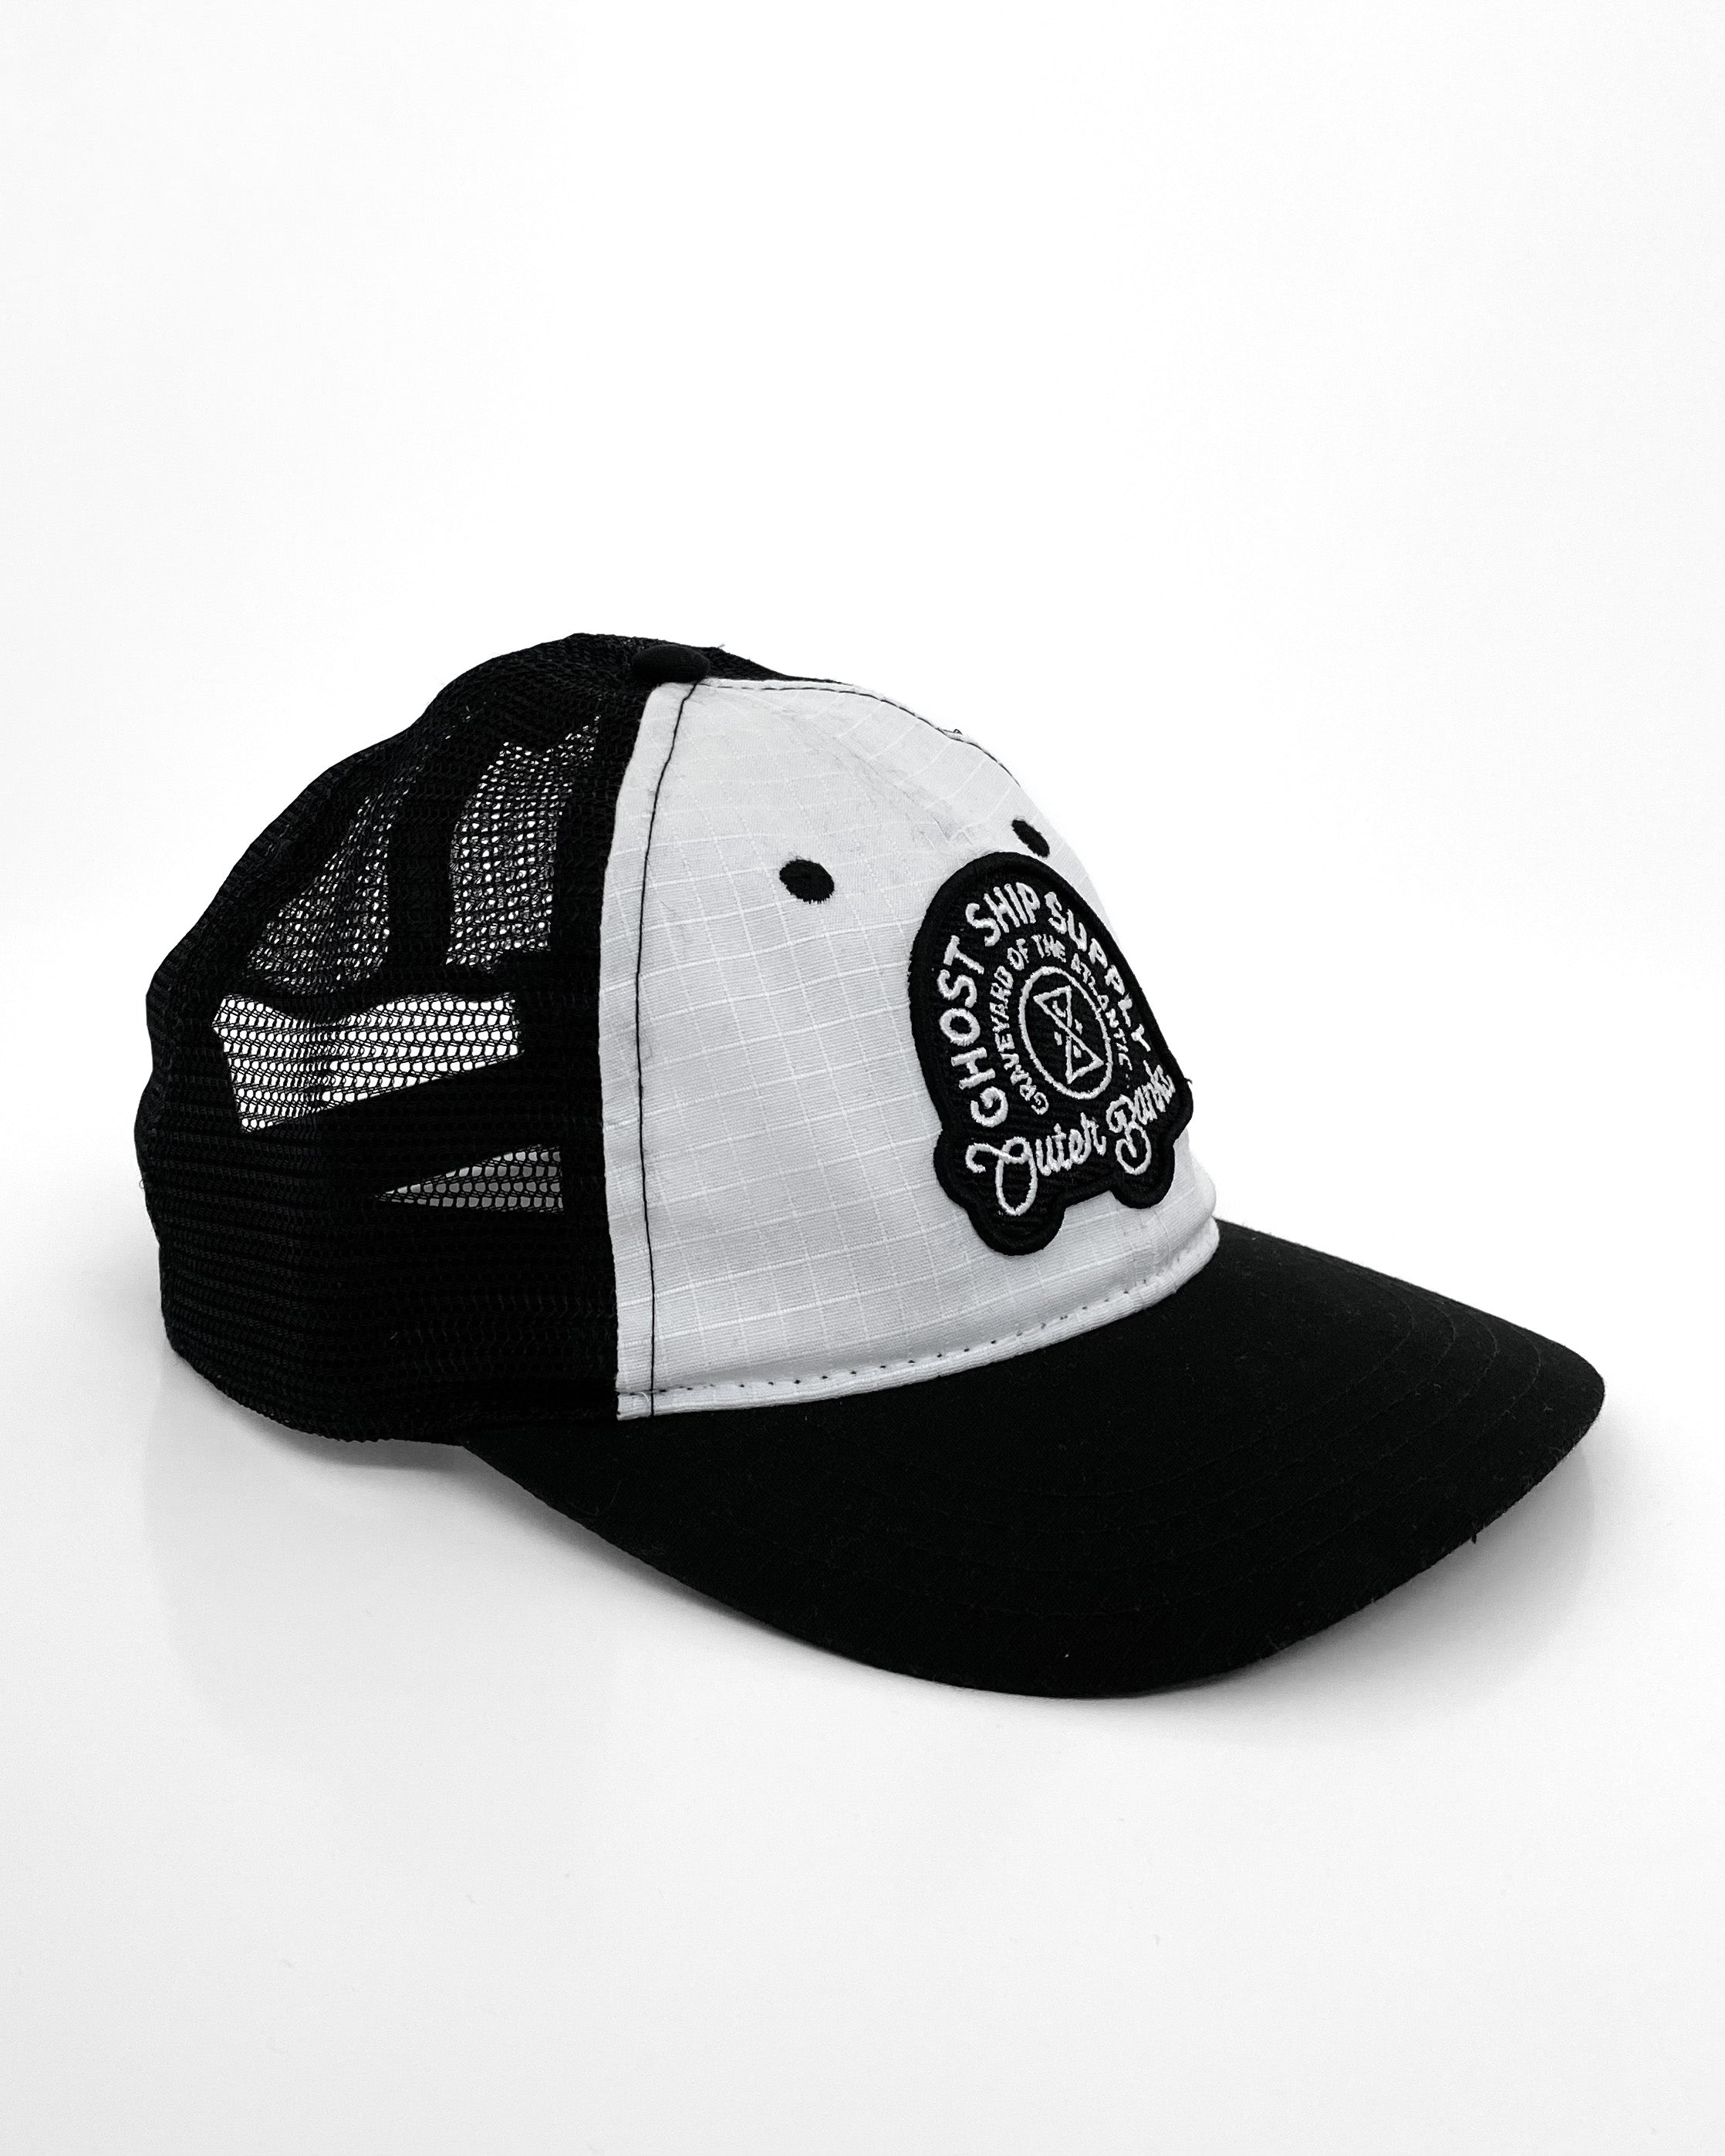 Insignia White-Black Low Crown Hat - GHOSTSHIP.Supply